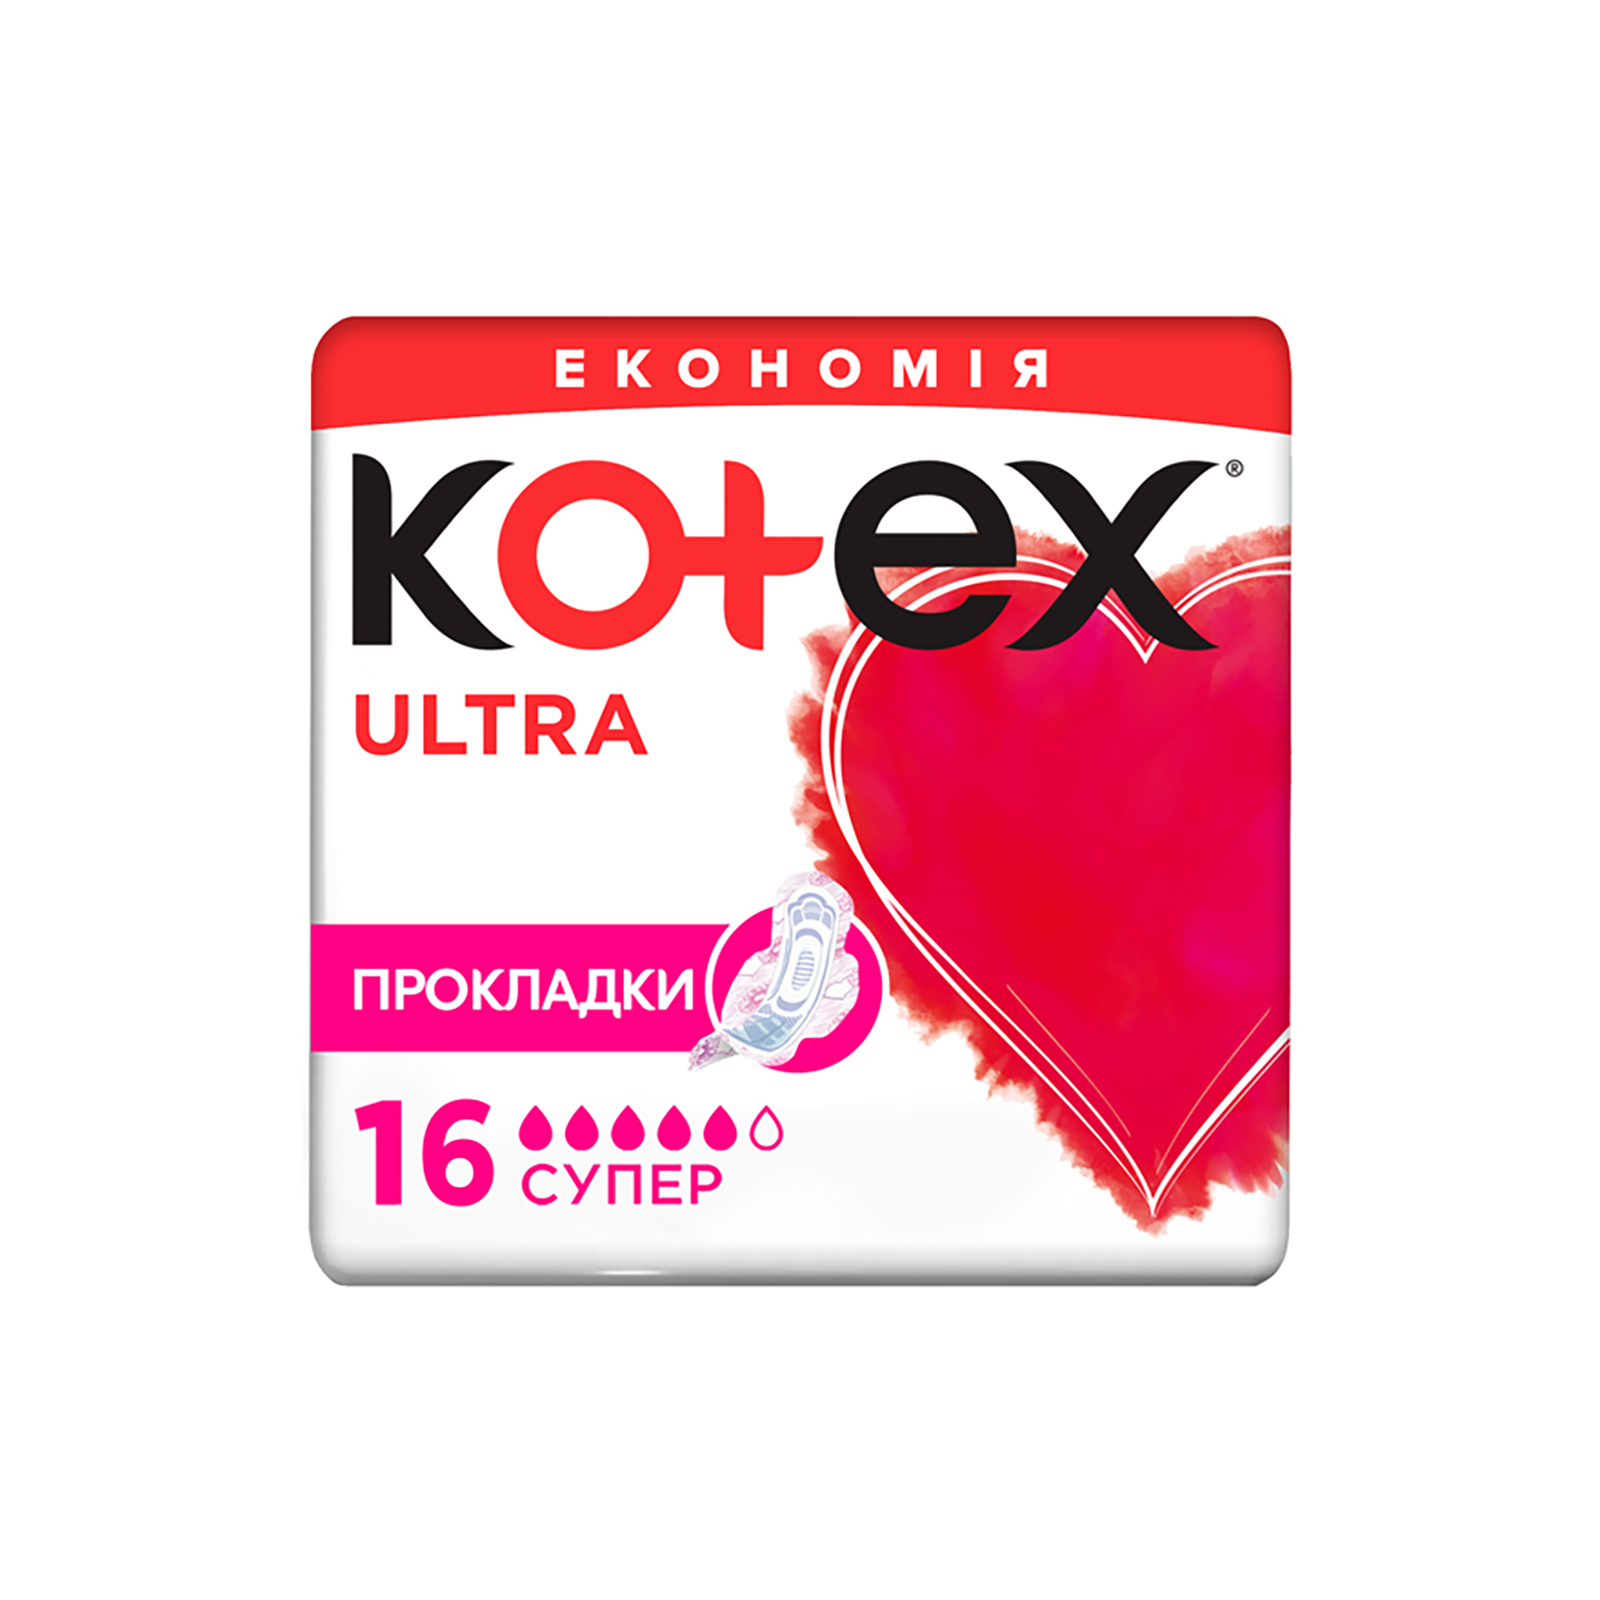 Гигиенические прокладки Kotex Ultra Super 8 шт. (5029053542645)